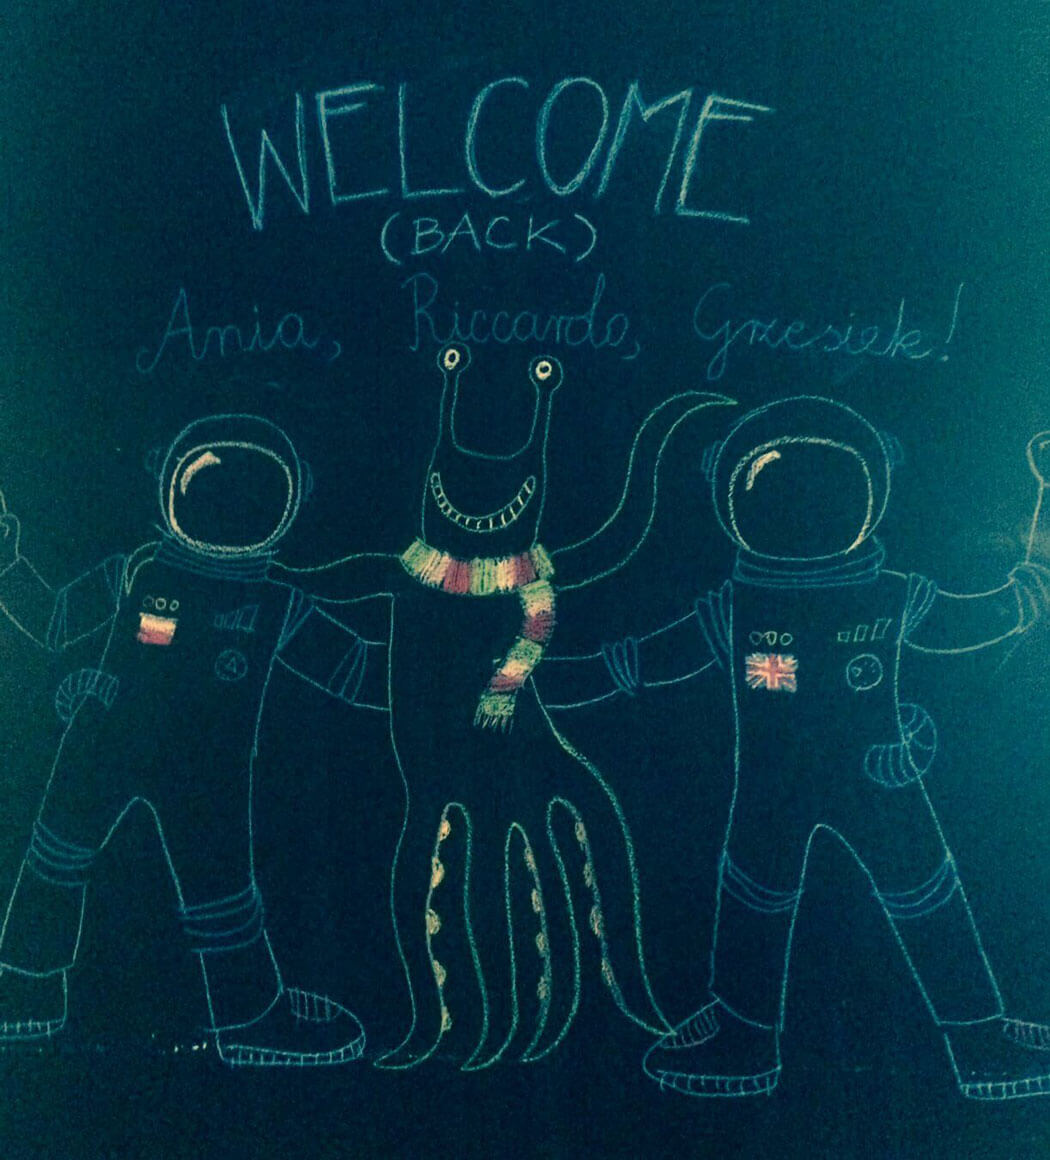 'Welcome back' drawing on a blackboard